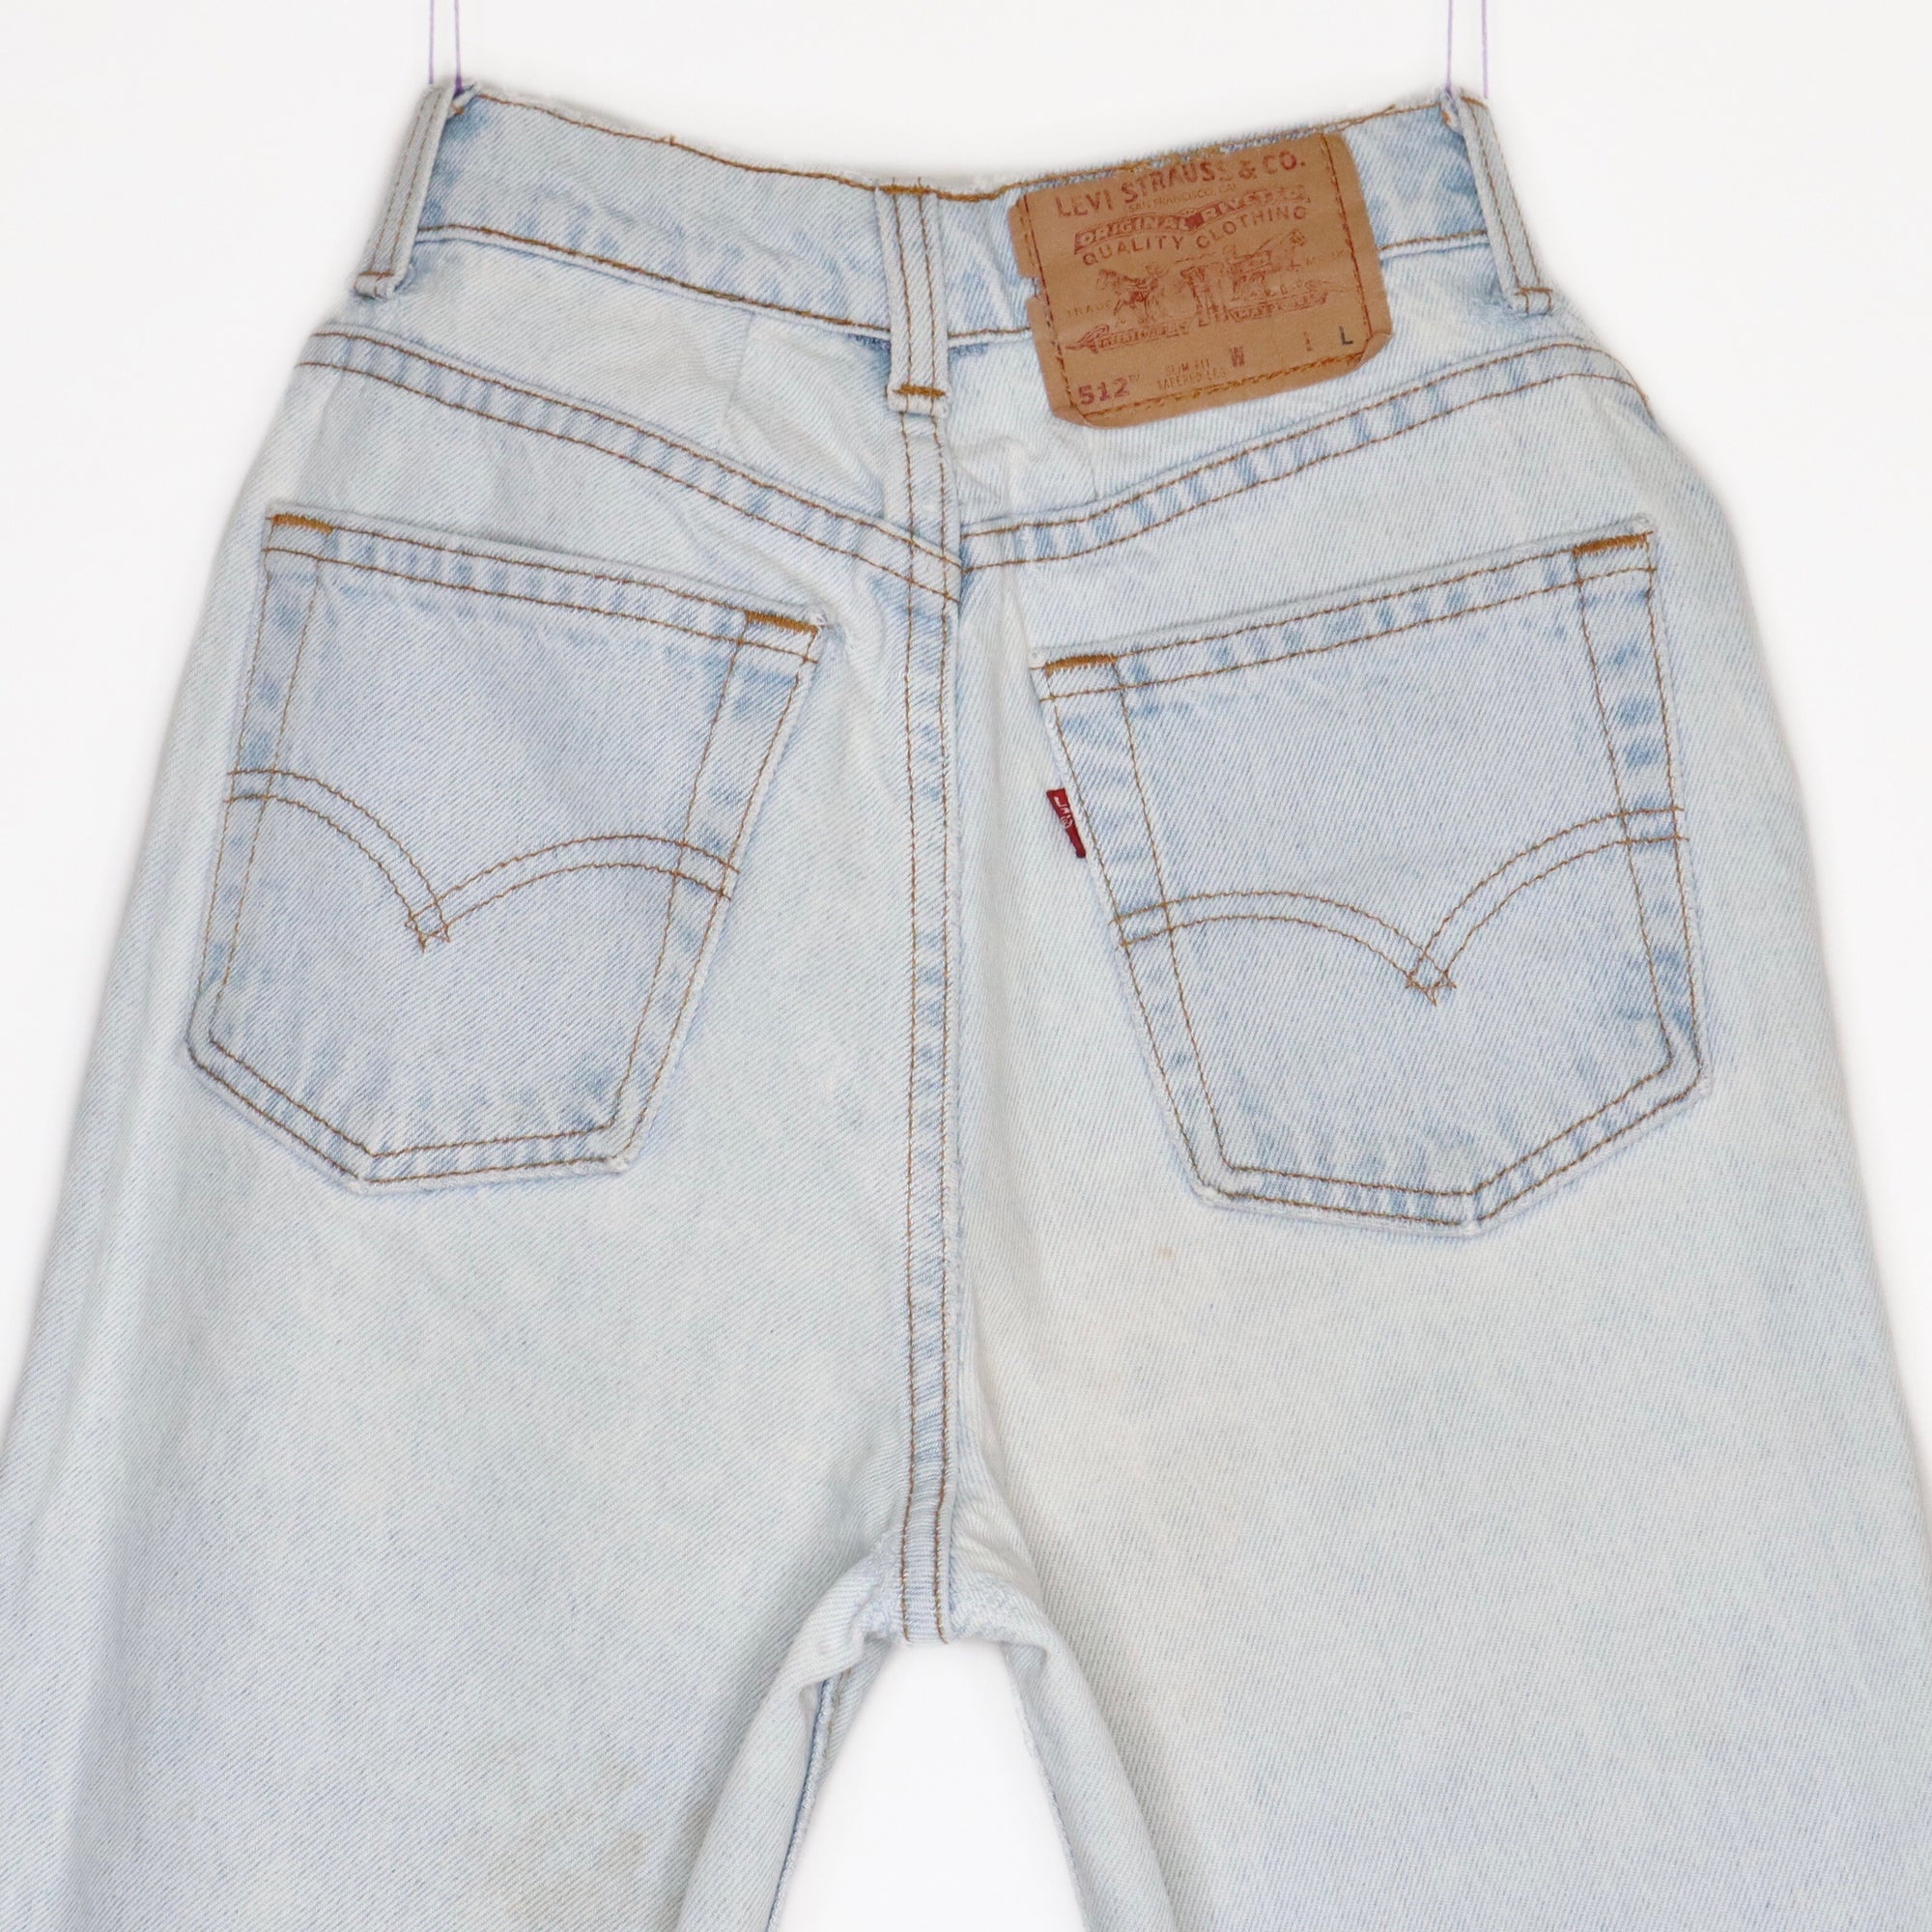 Vintage 90s Light Wash High Waisted Levis Jeans